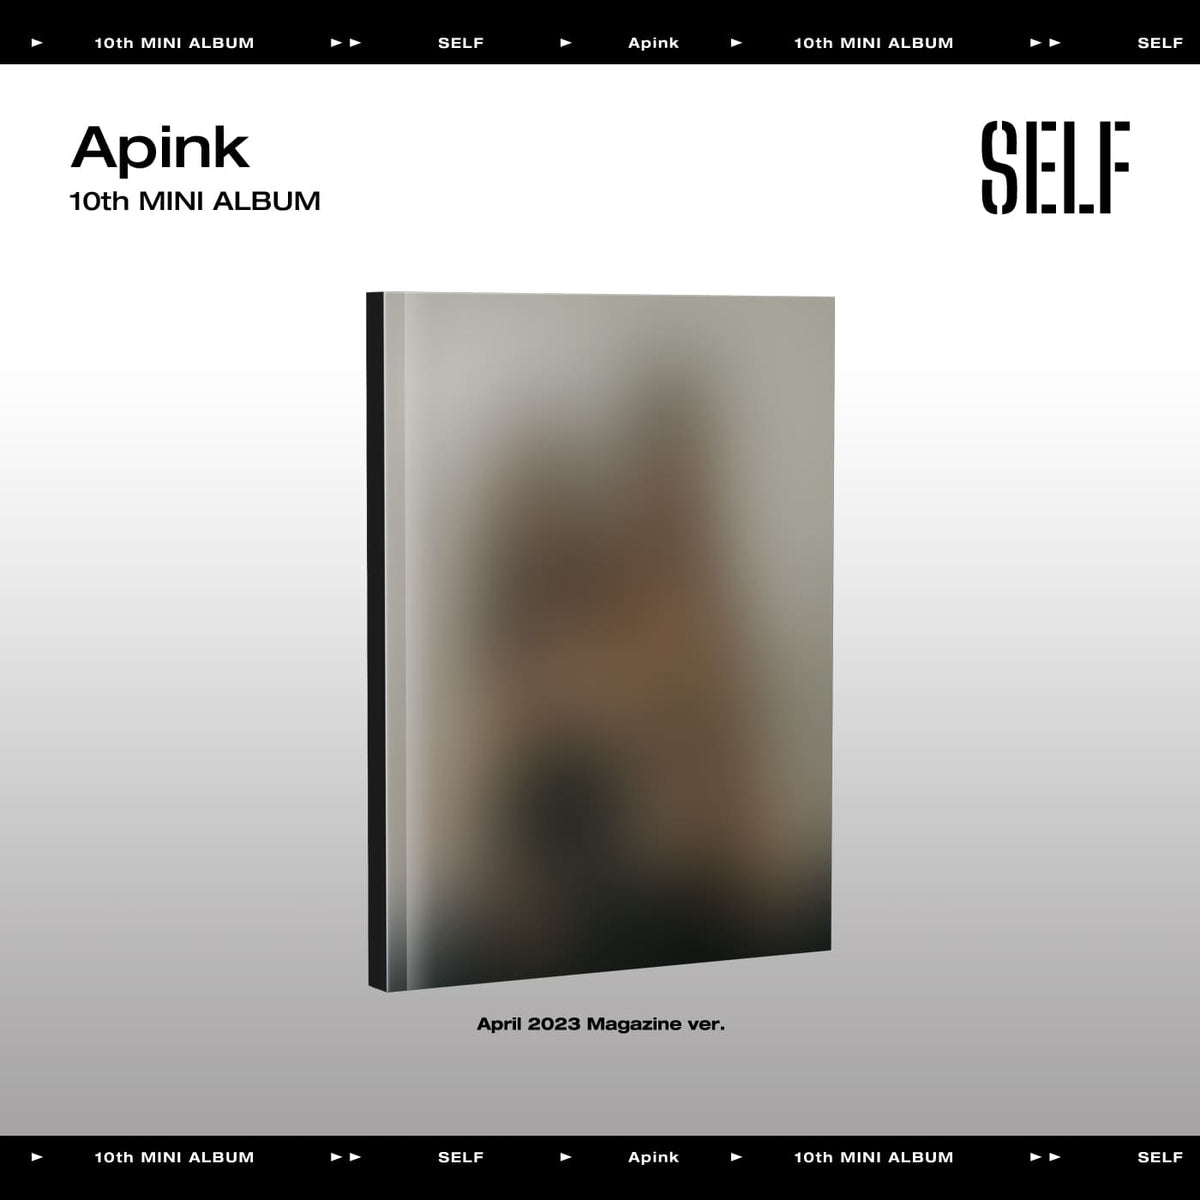 Apink - 10th Mini Album [SELF] (April 2023 Version)